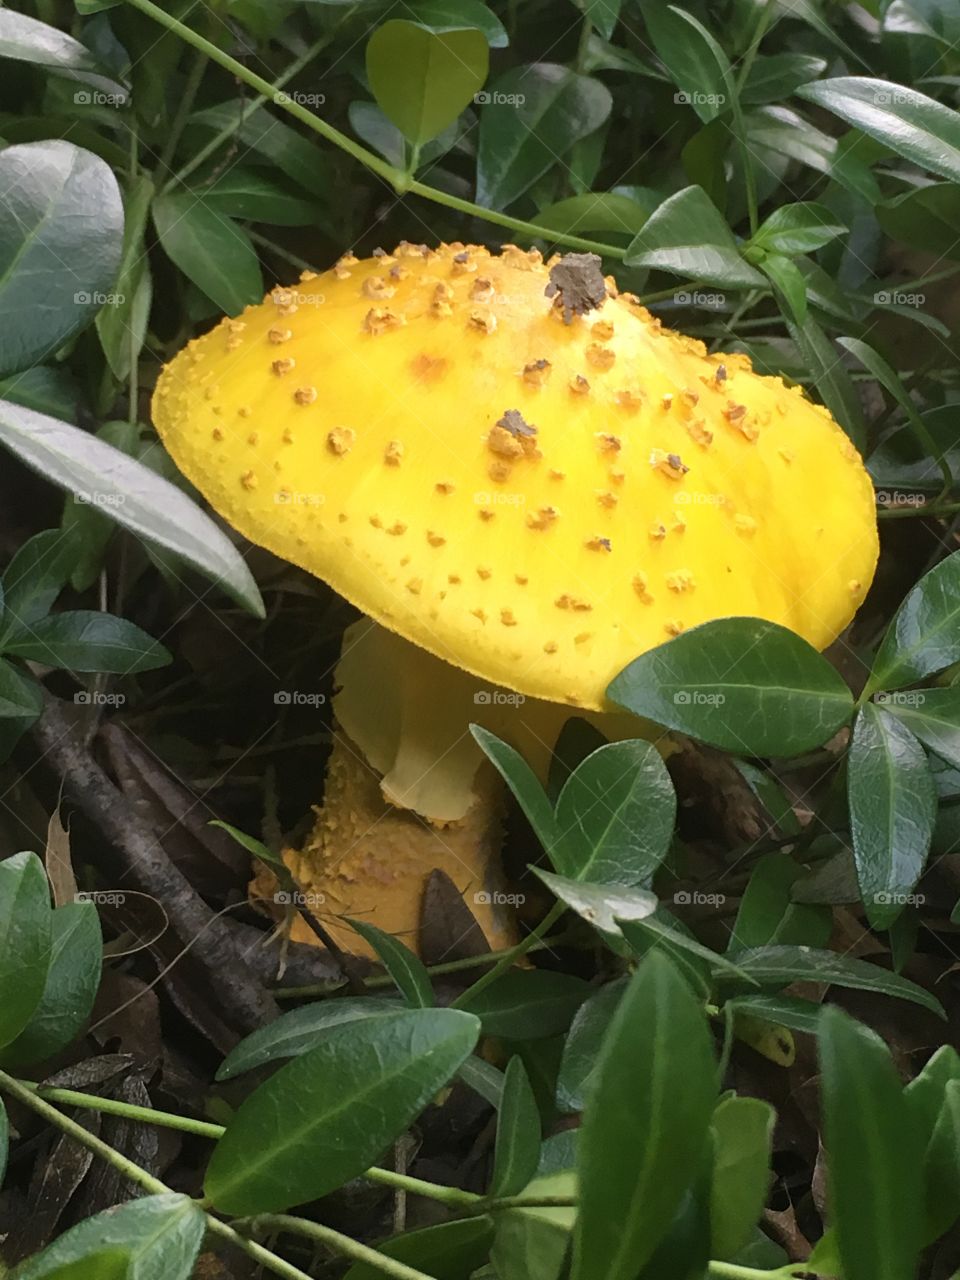 Large warty yellow mushroom amid vinca